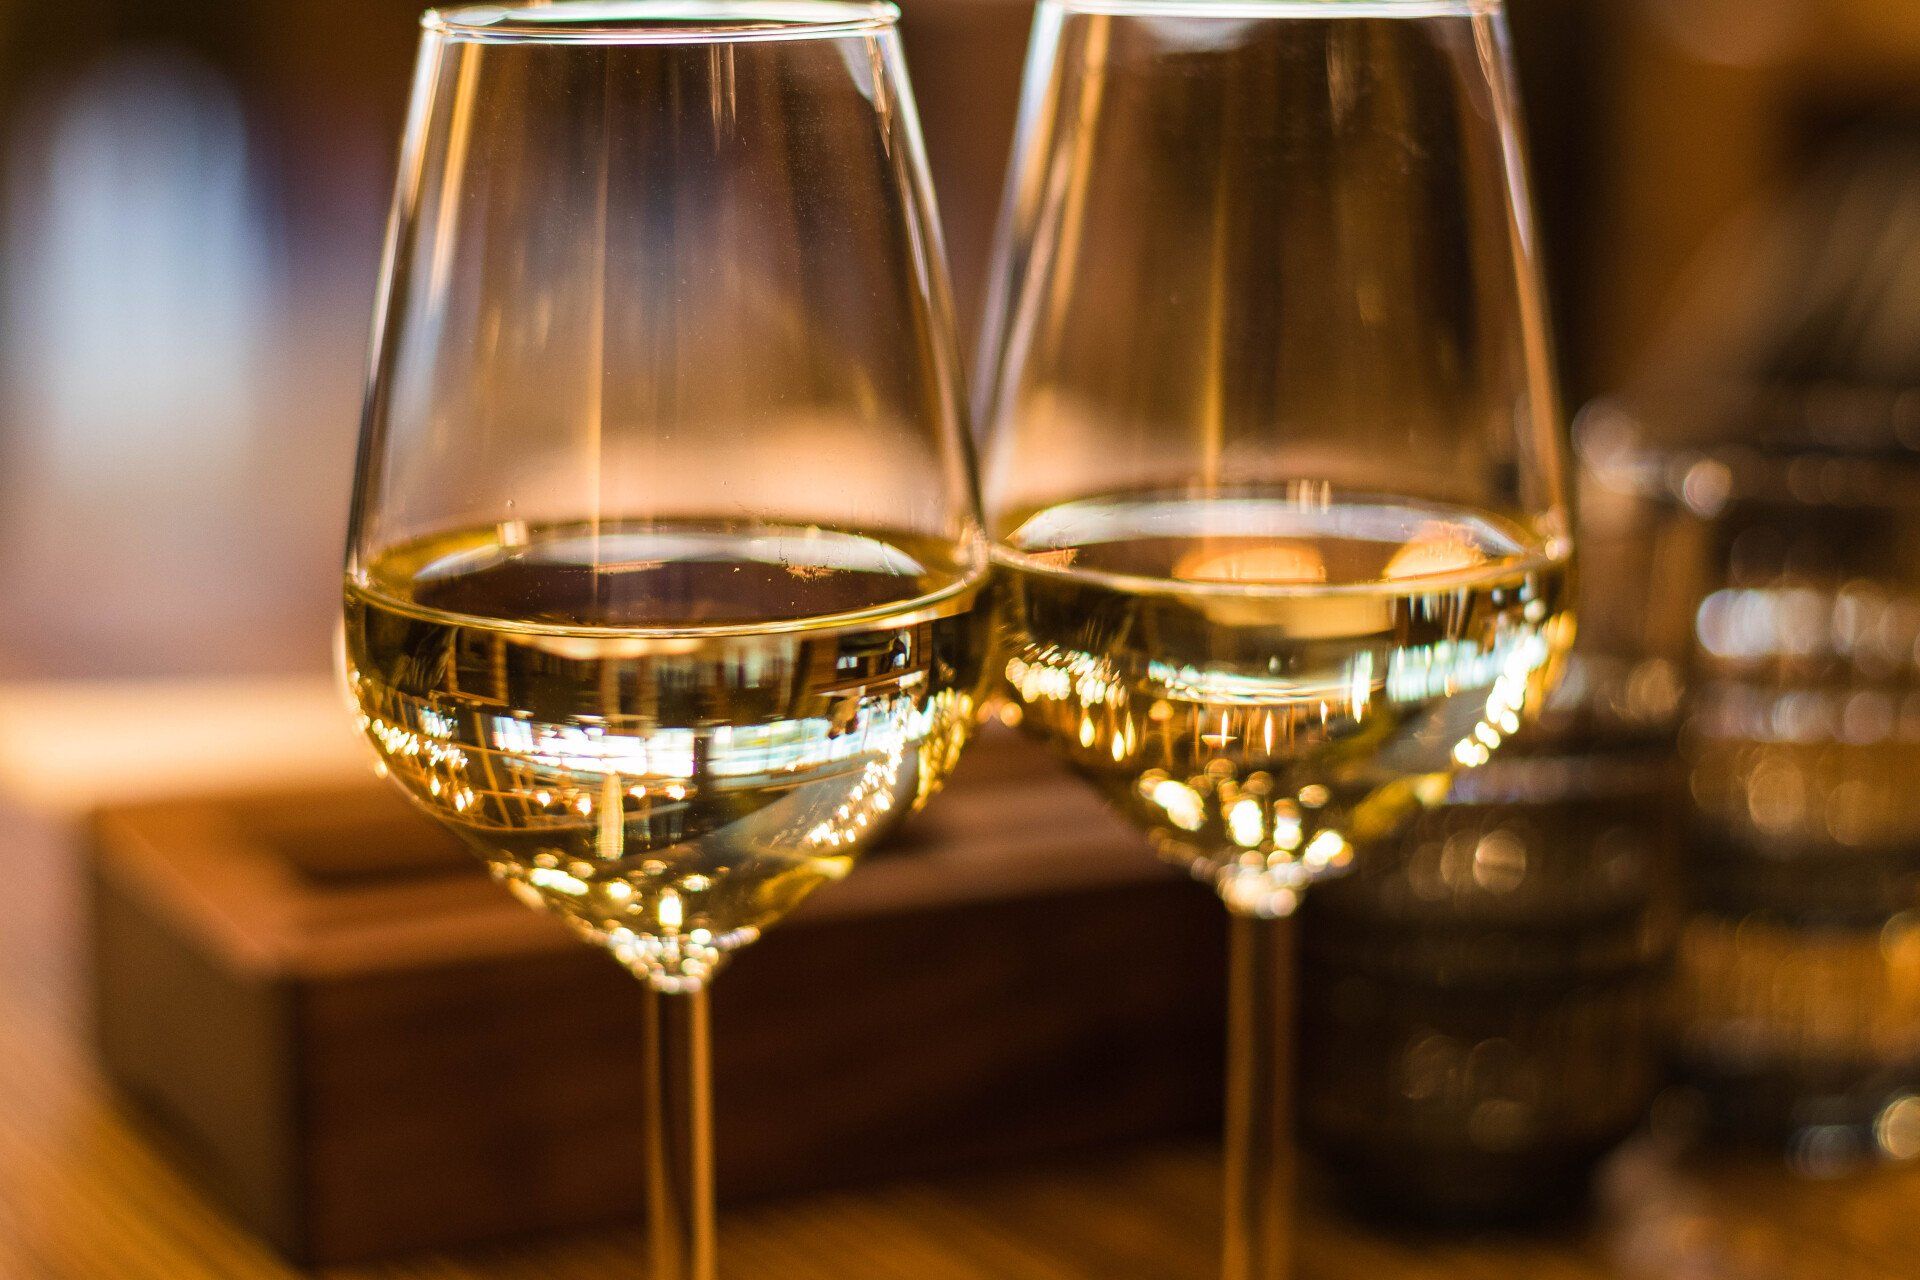 passion-cellars-wine-glasses